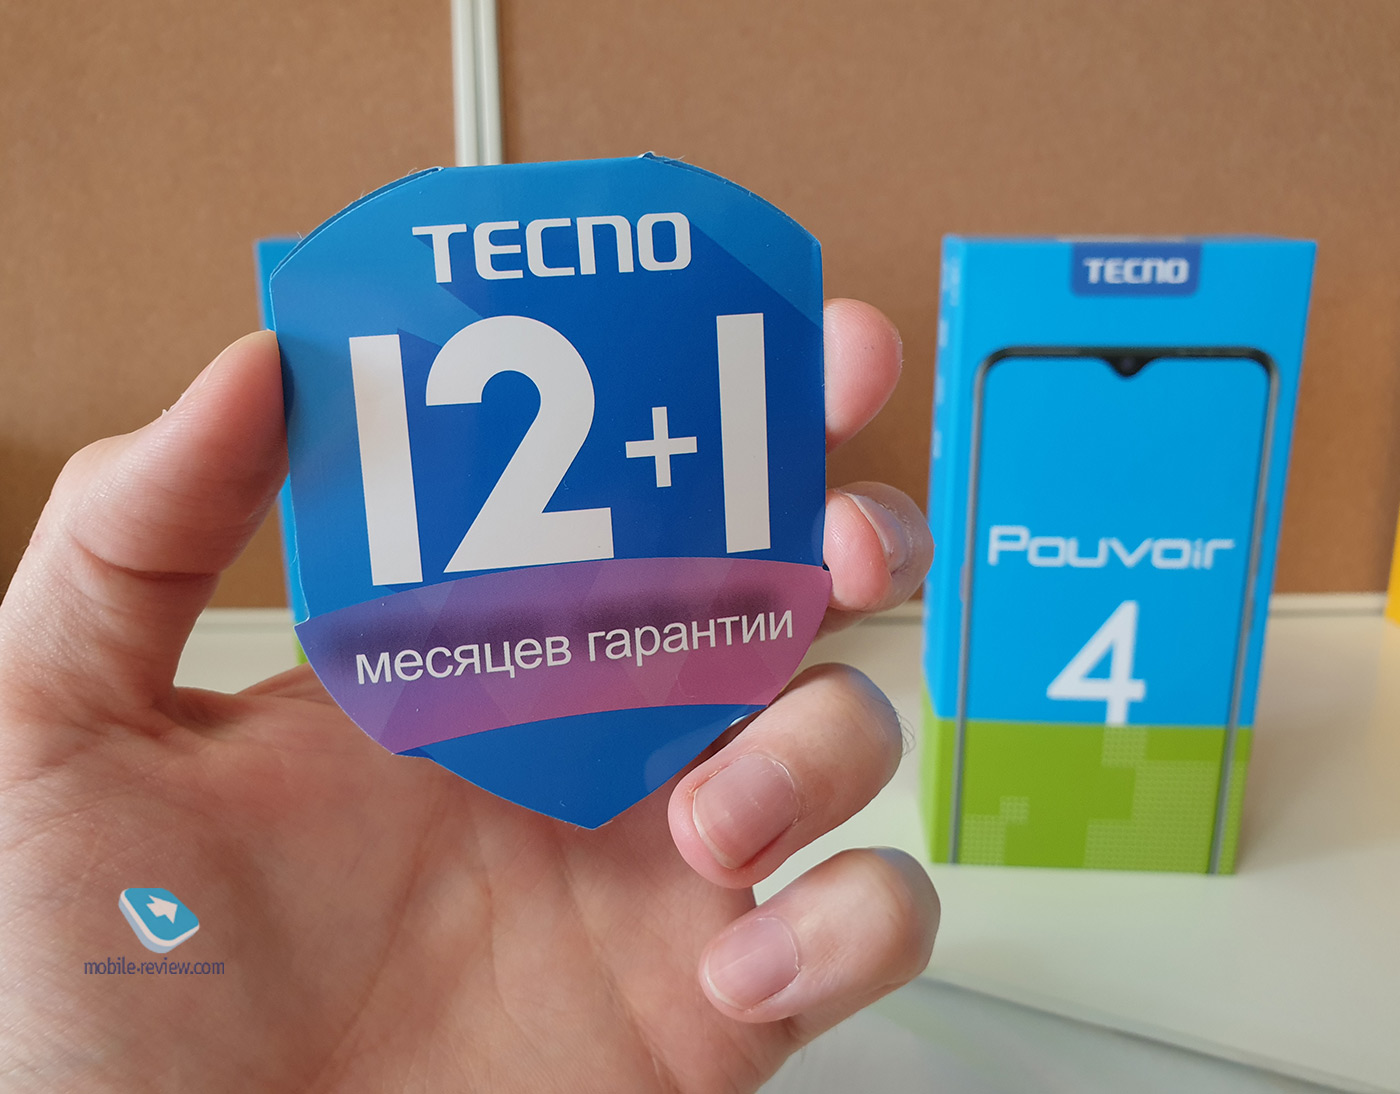 Optimal smartphone for 9 rubles: TECNO Pouvoir 990